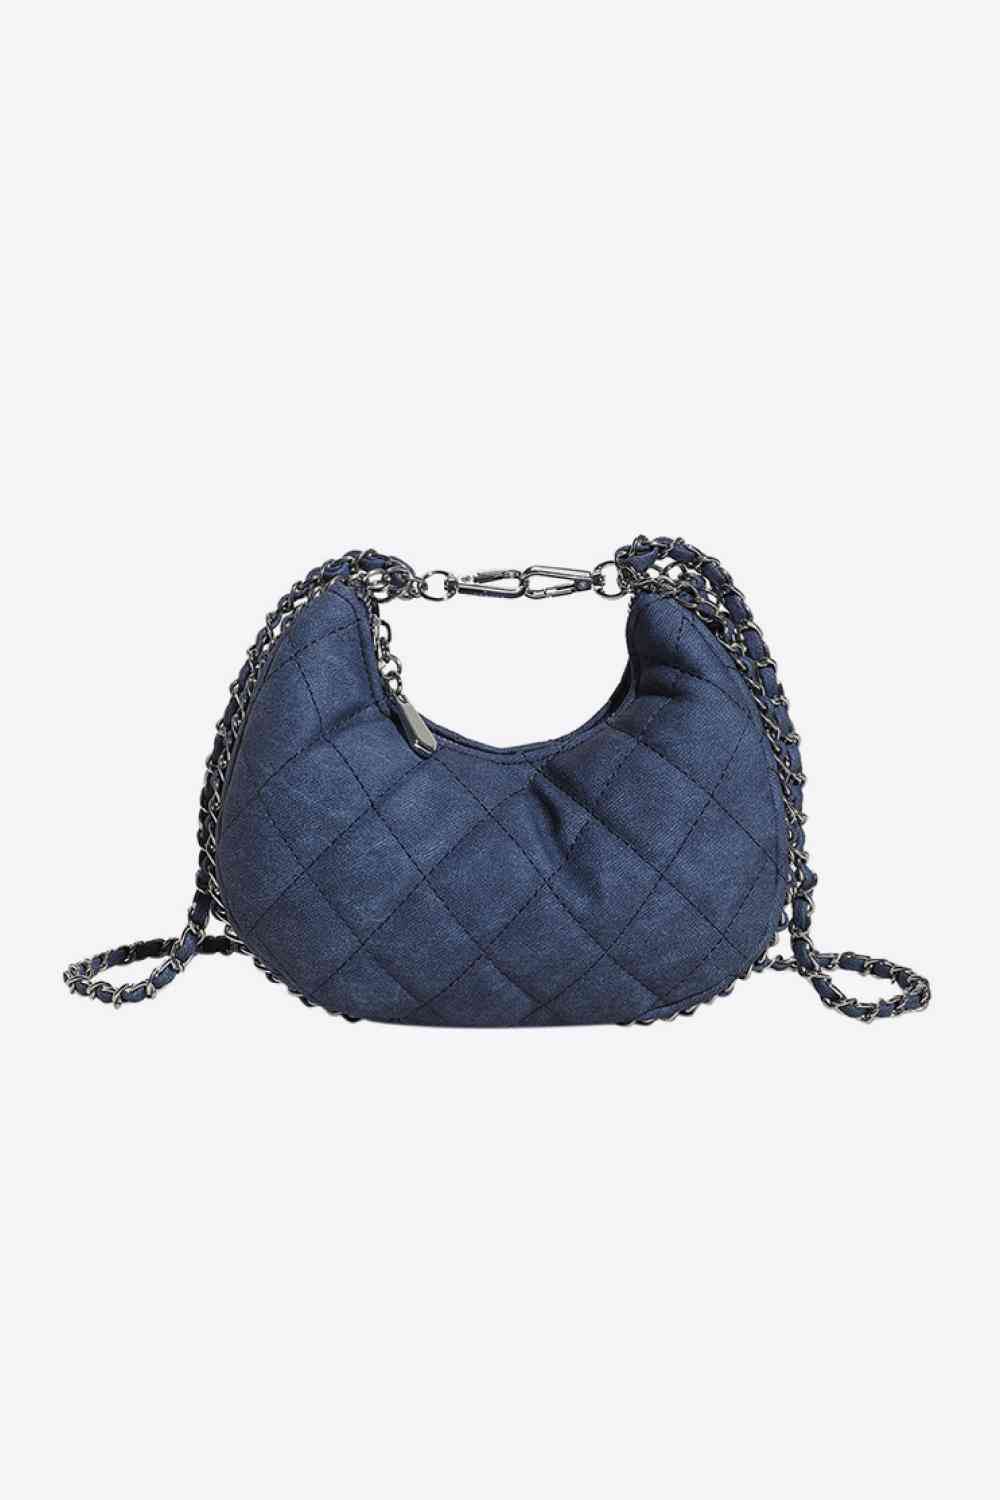 PU Leather Handbag - Navy / One Size - Women Bags & Wallets - Handbags - 10 - 2024